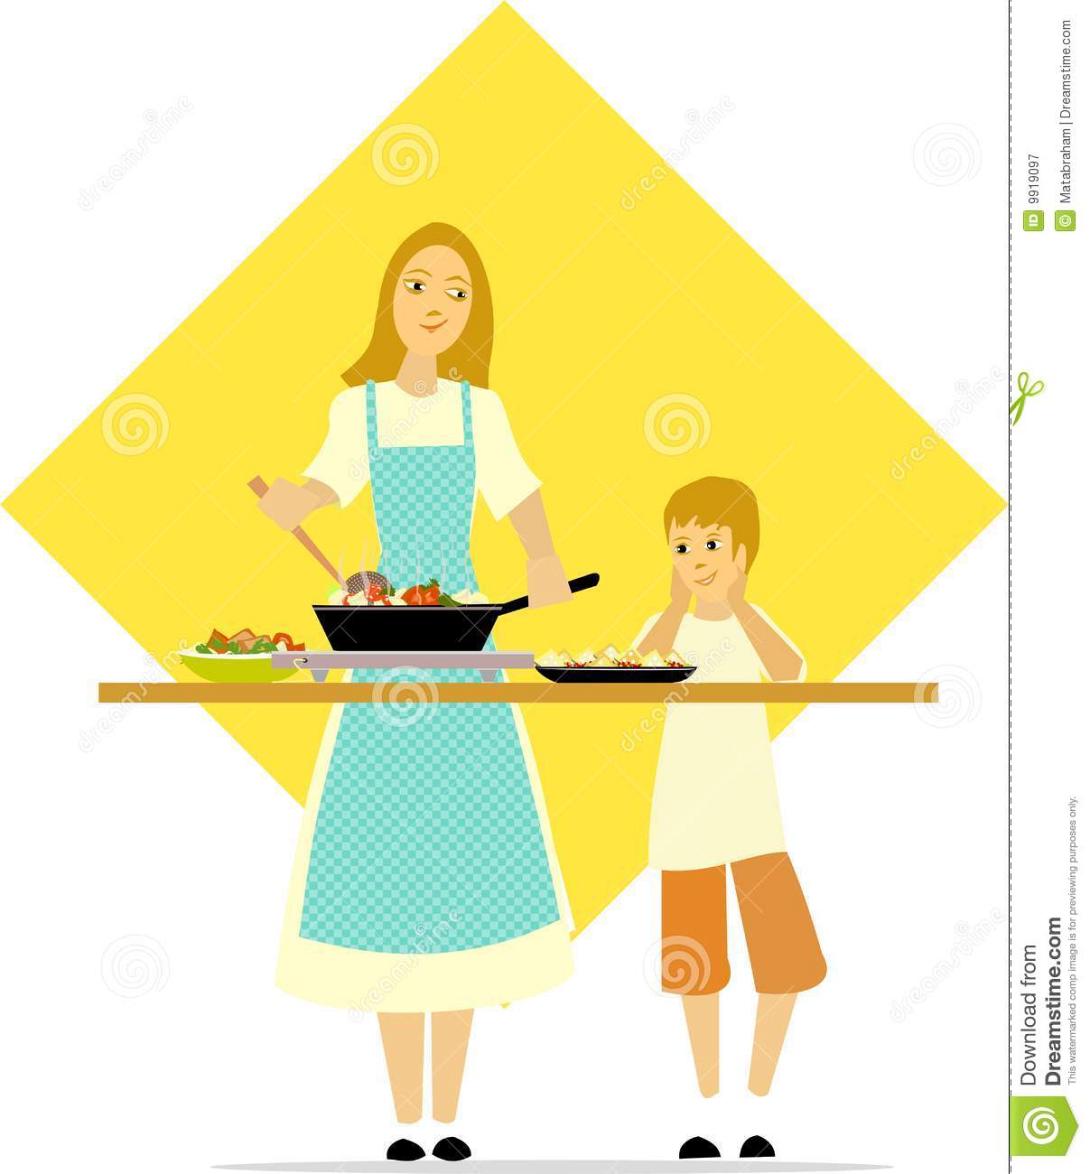 little-boy-watches-mom-cooking.jpg